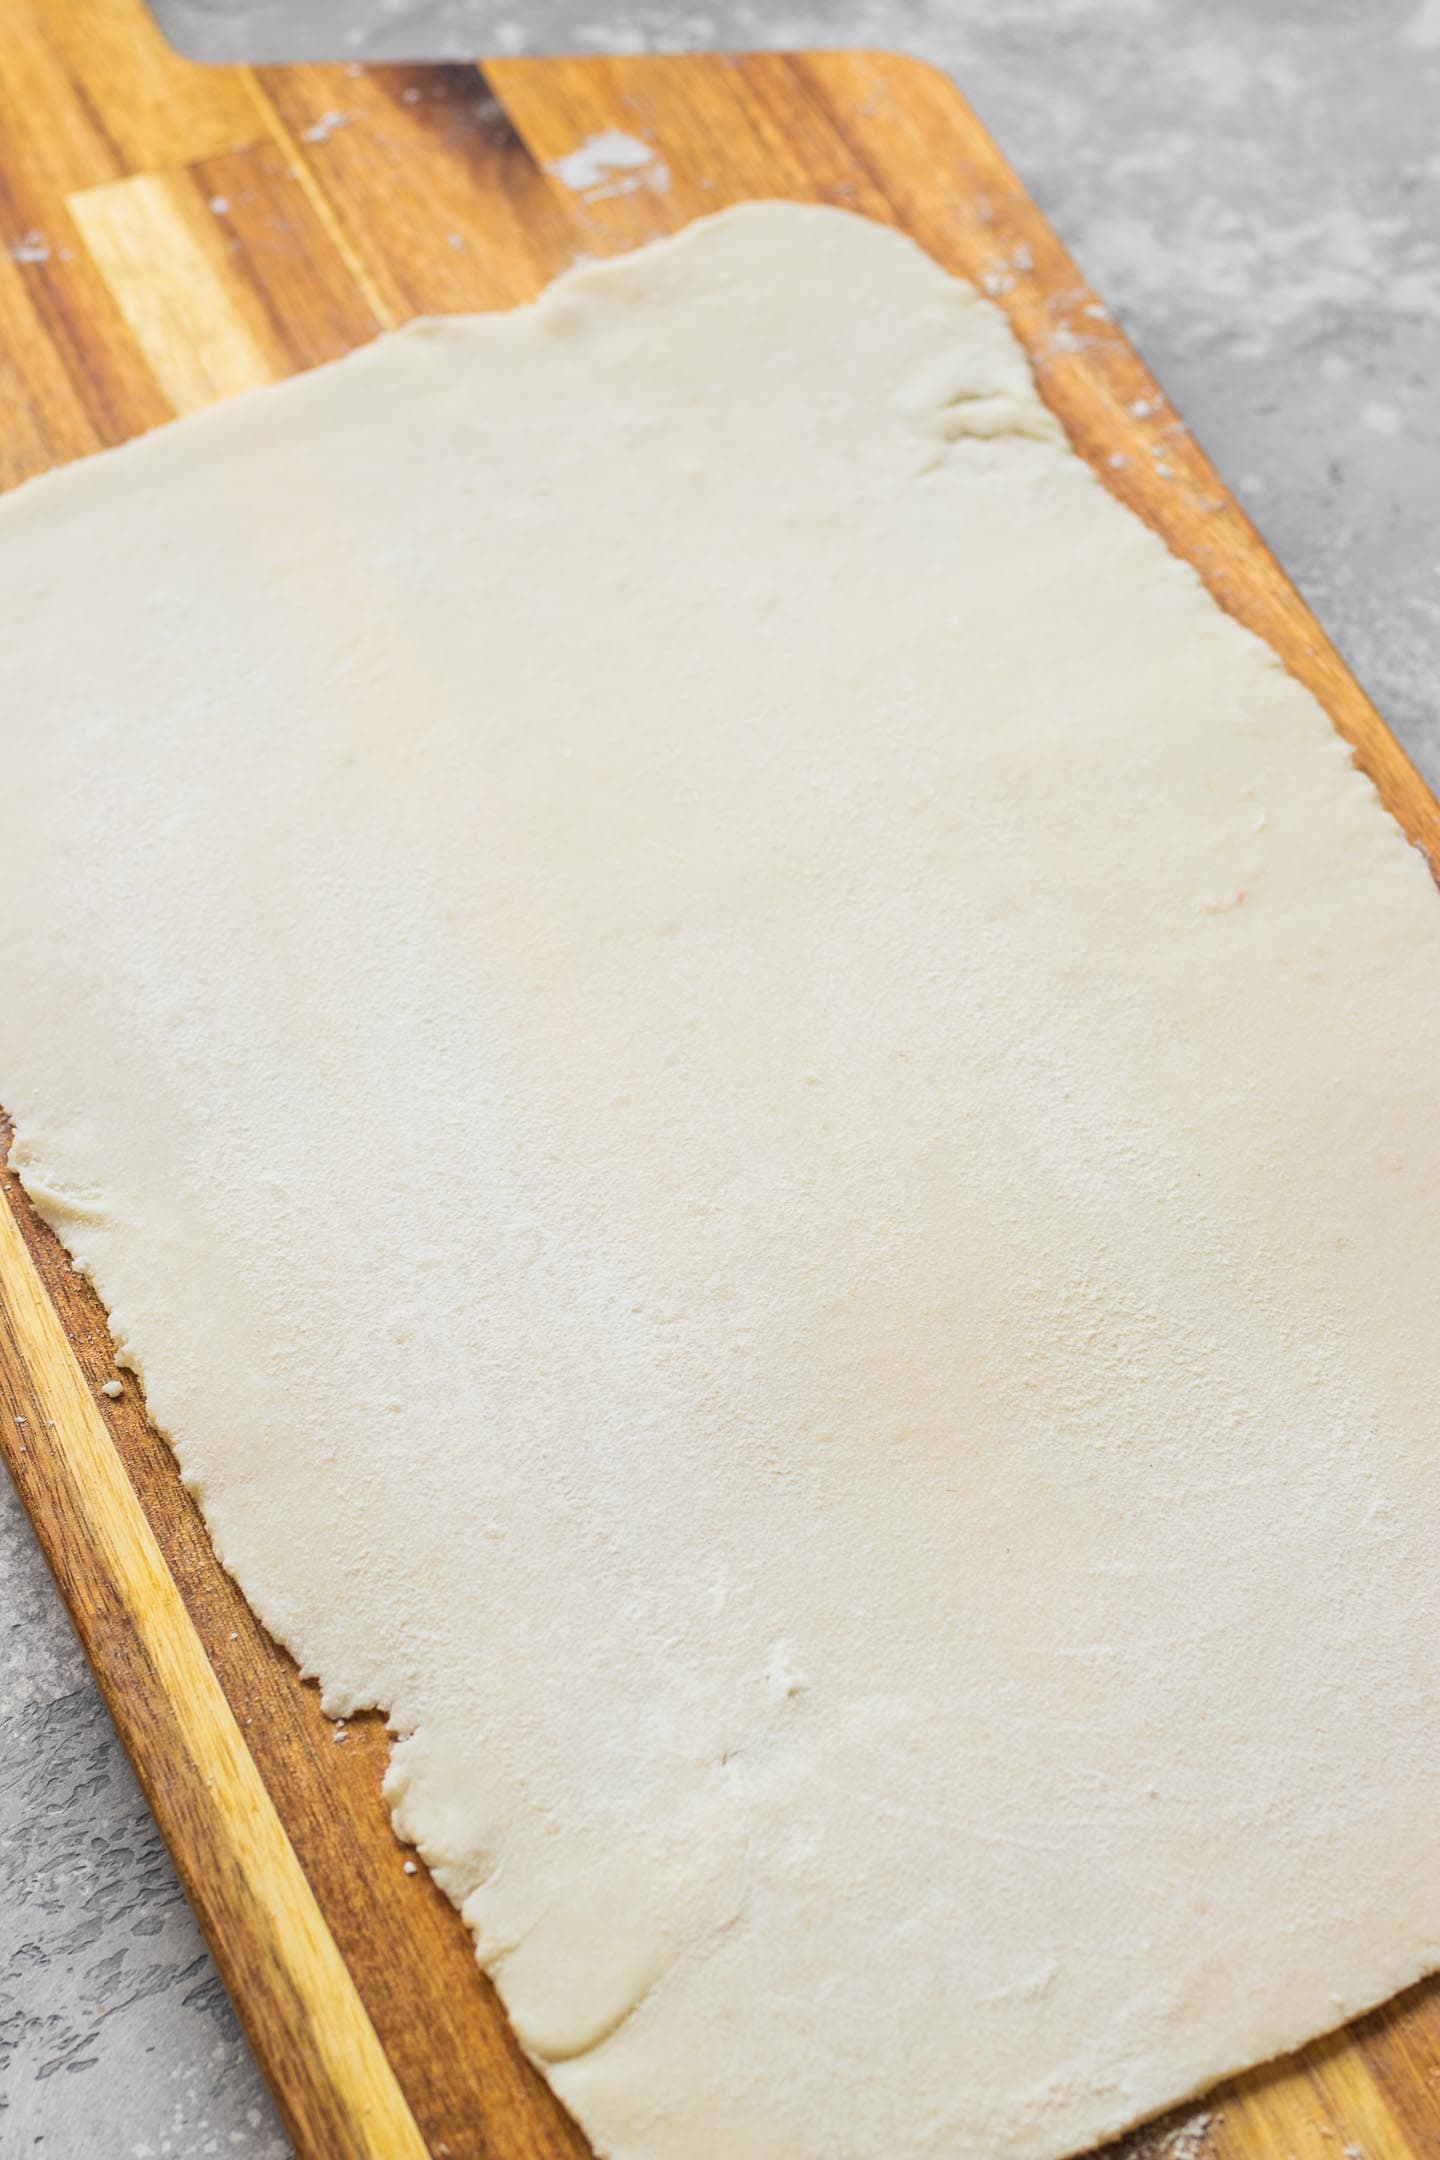 Sheet of gluten-free dough